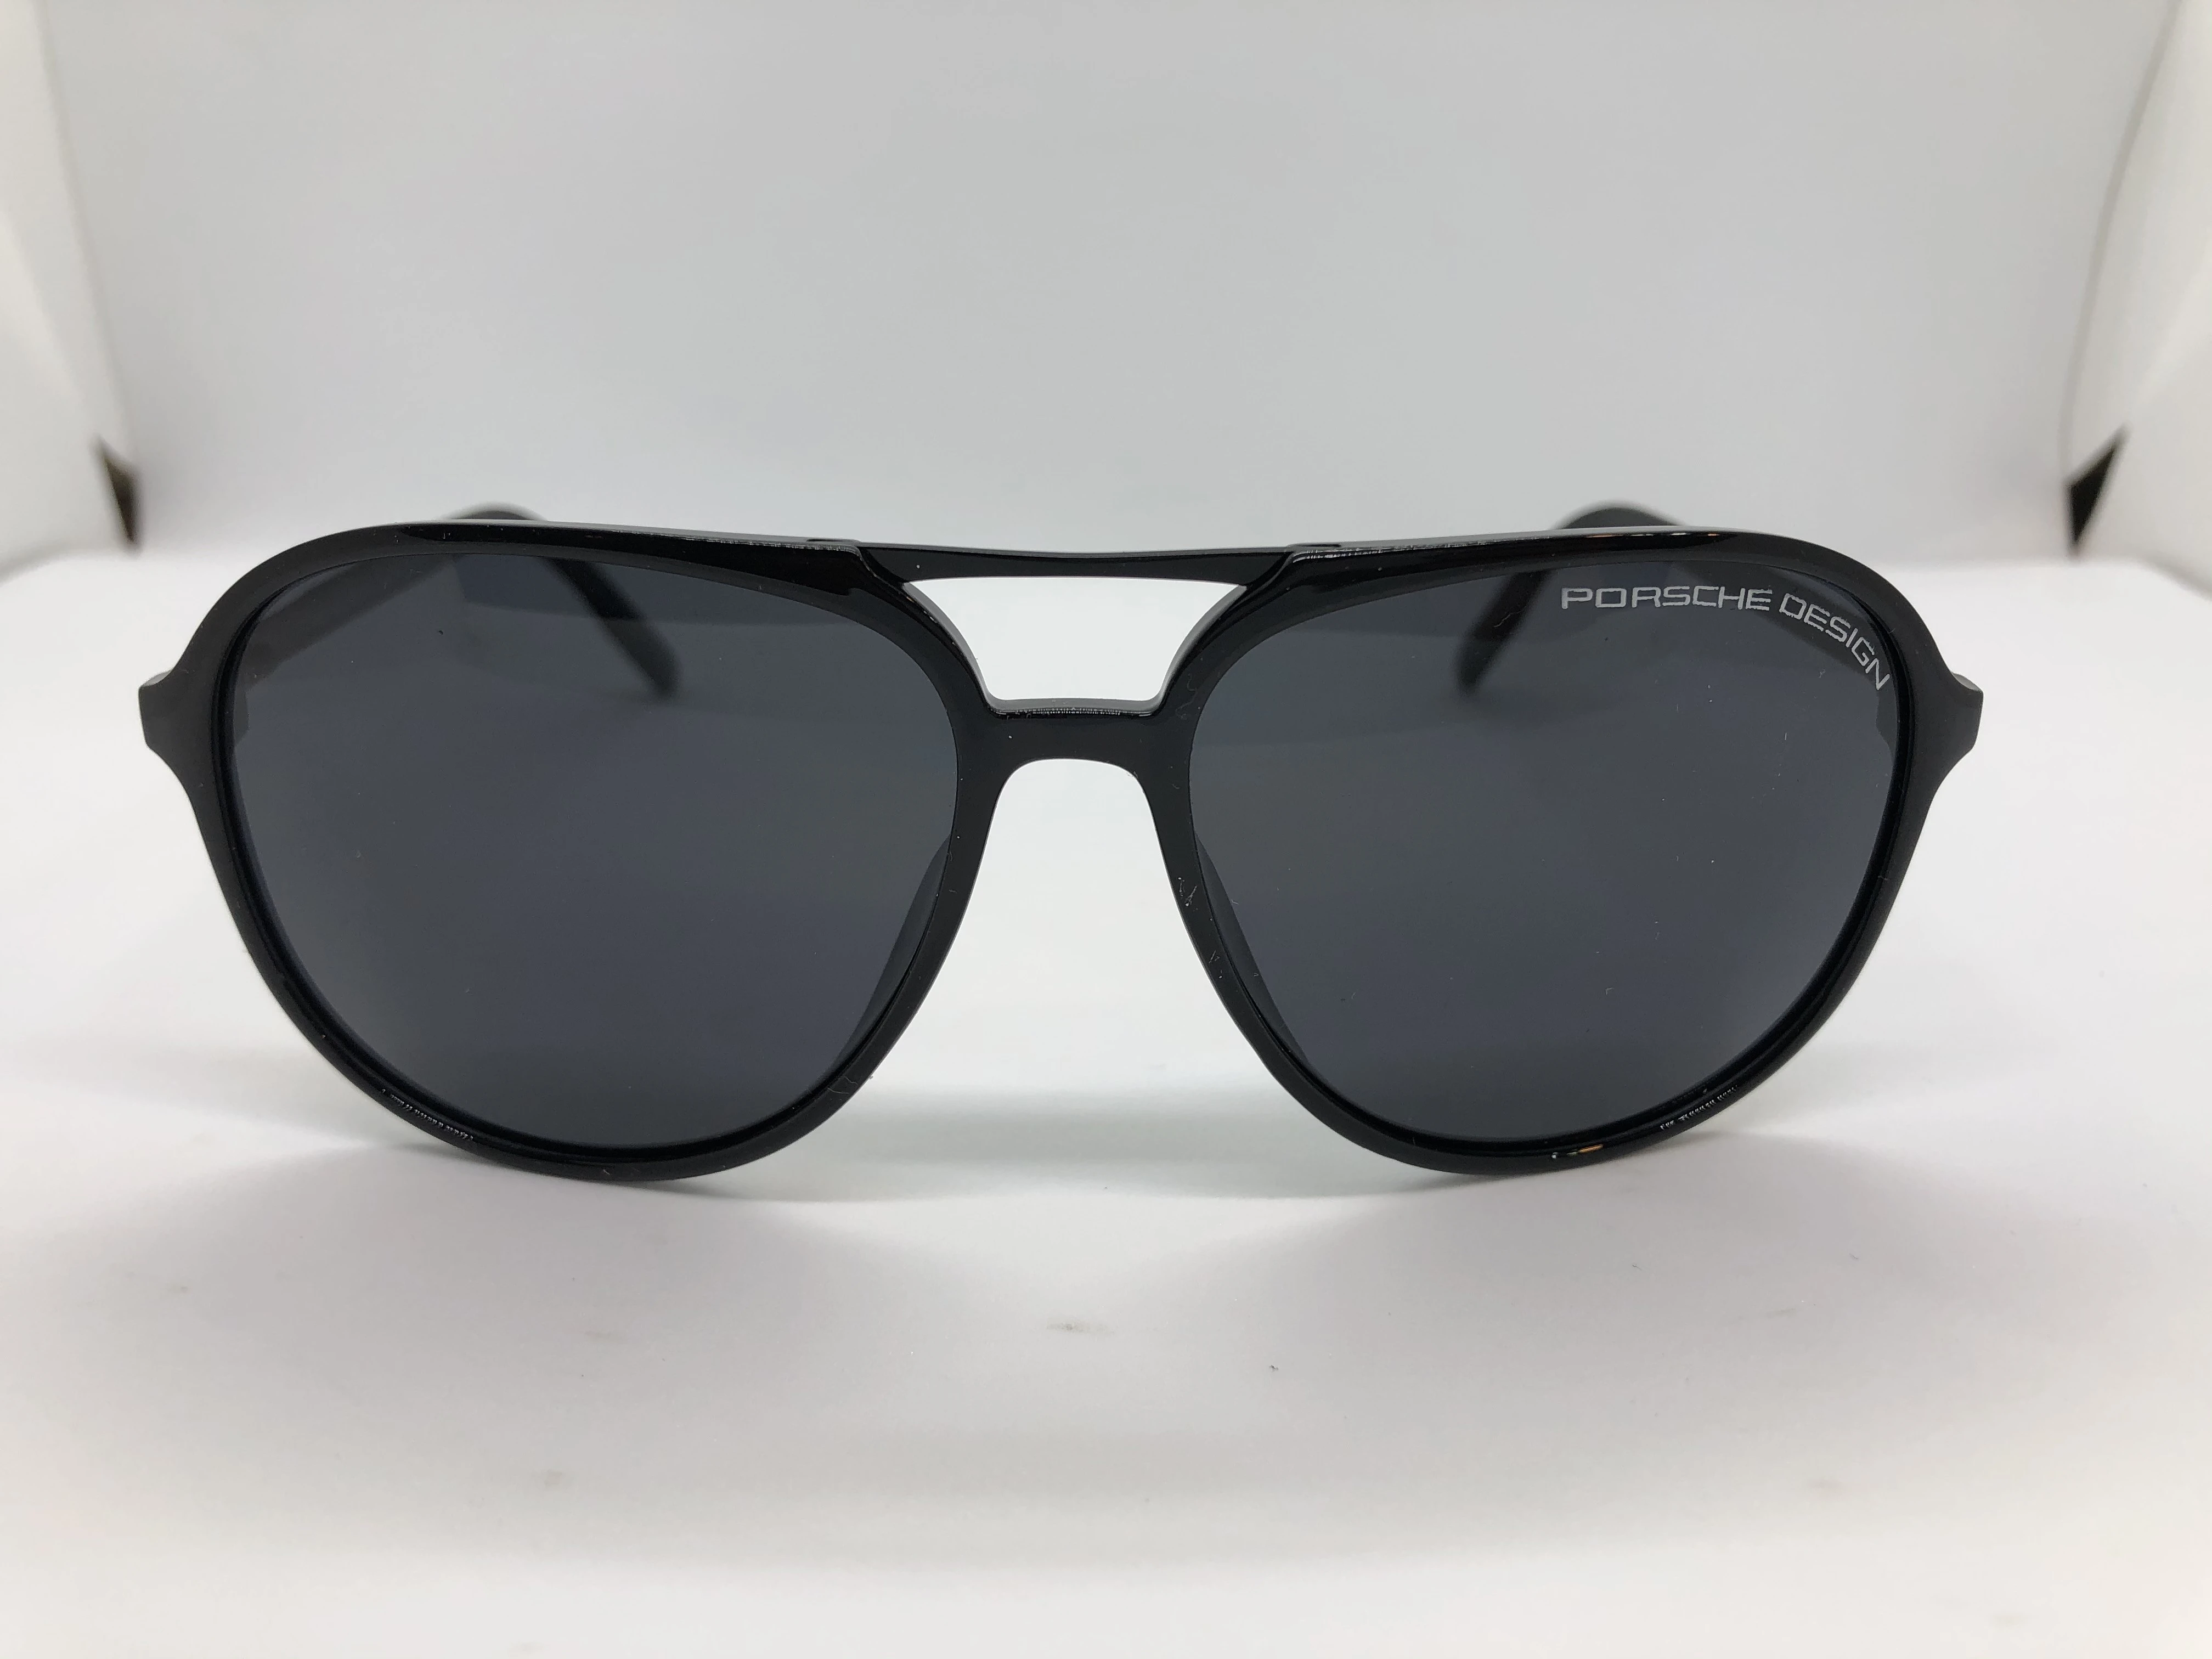 Sunglasses - Porsche Design - Polycarbonate Frame - Black Lenses - Black Metal Arm - For Men